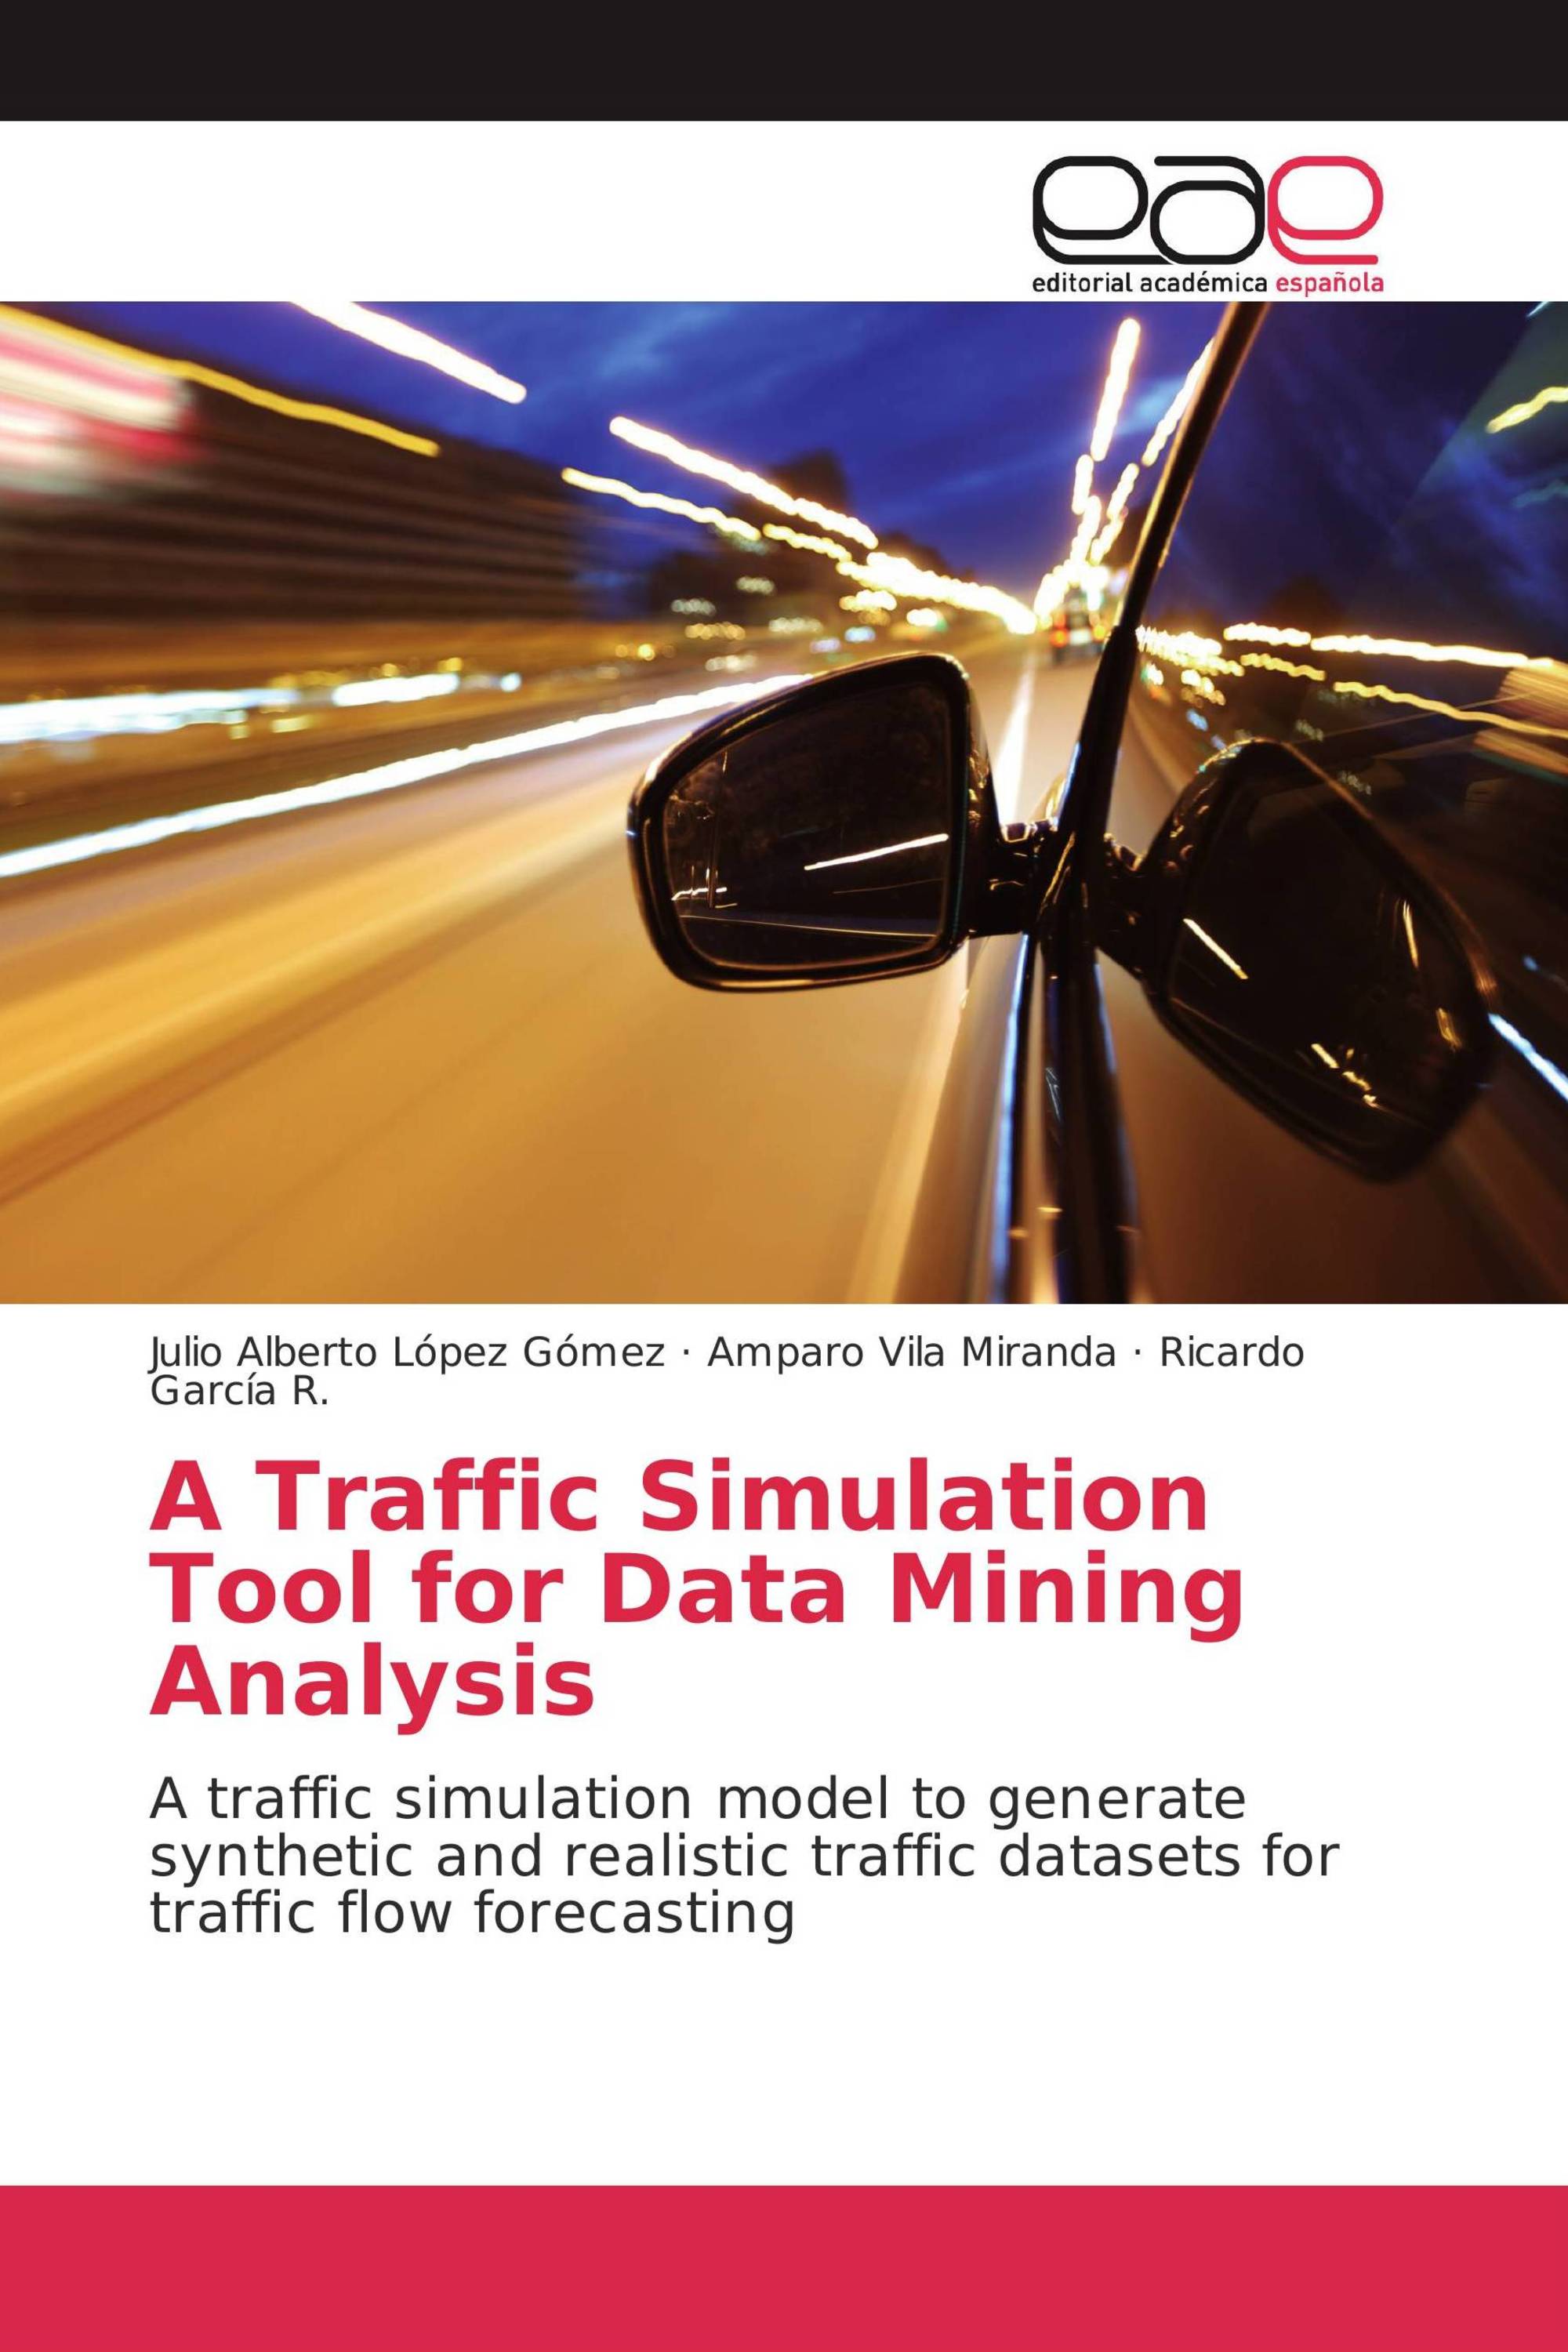 traffic analysis tools